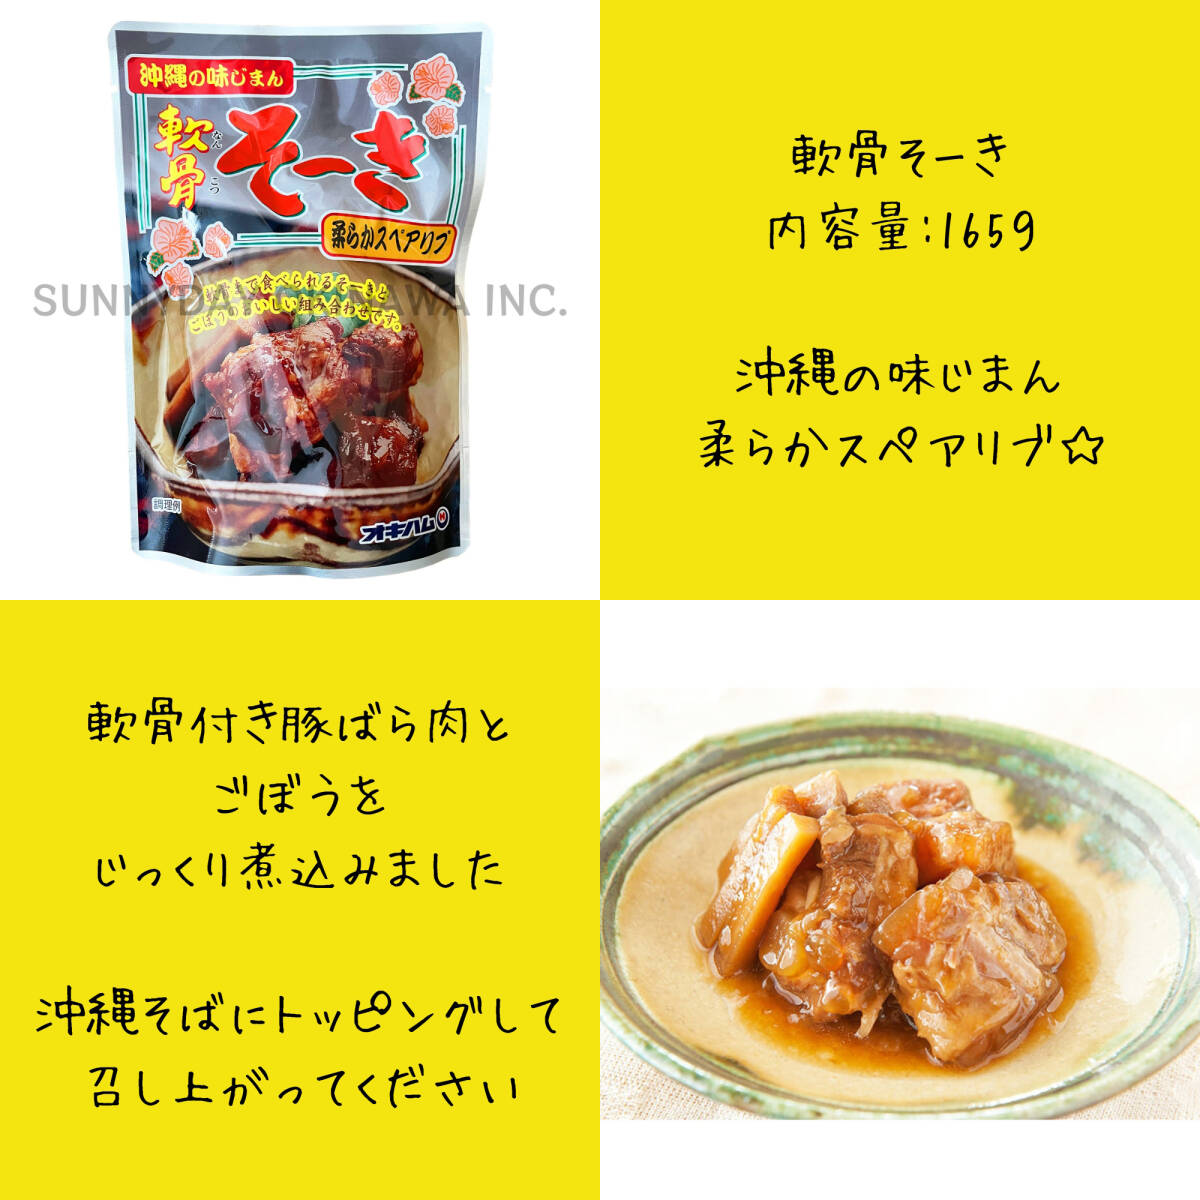 .. со-ки соба 2 порции Okinawa соба . лапша модель соба суп имеется ...-. maru take еда oki ветчина . земля производство ваш заказ 